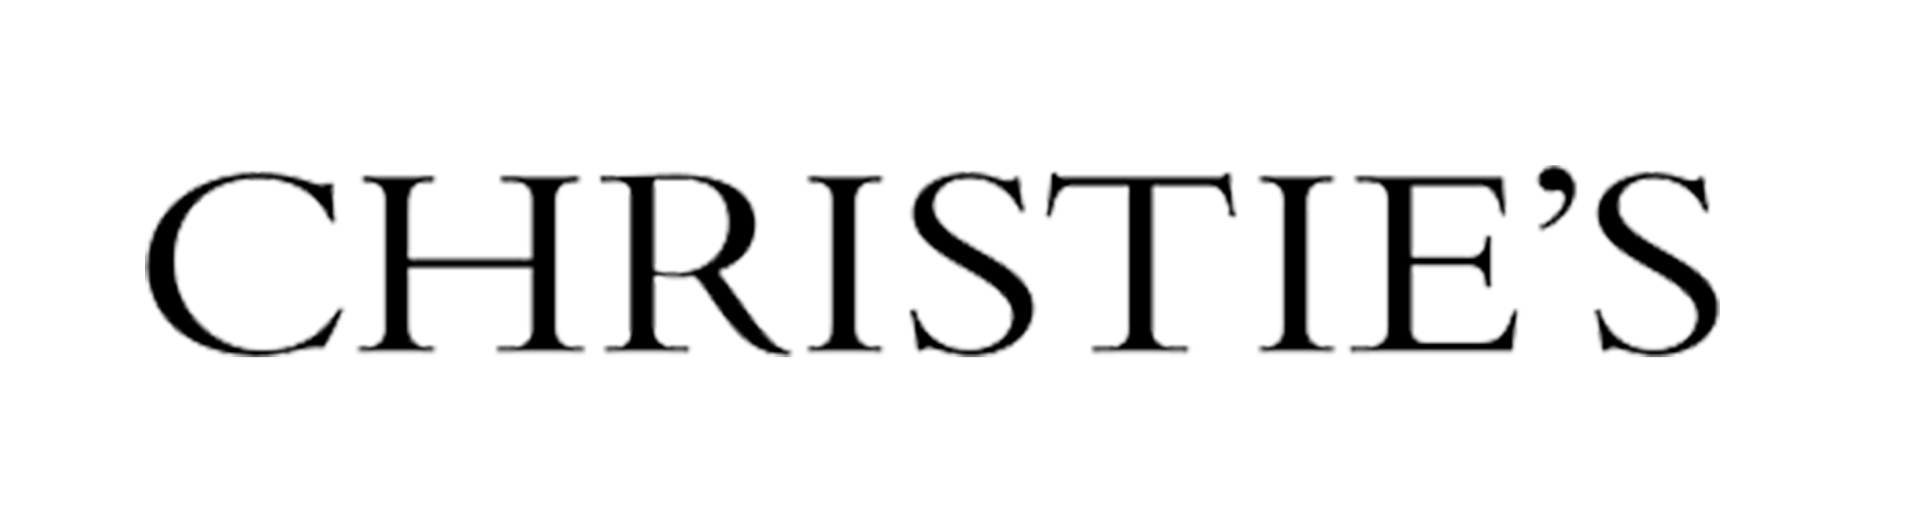 Christies-logo_1920x580_7.png